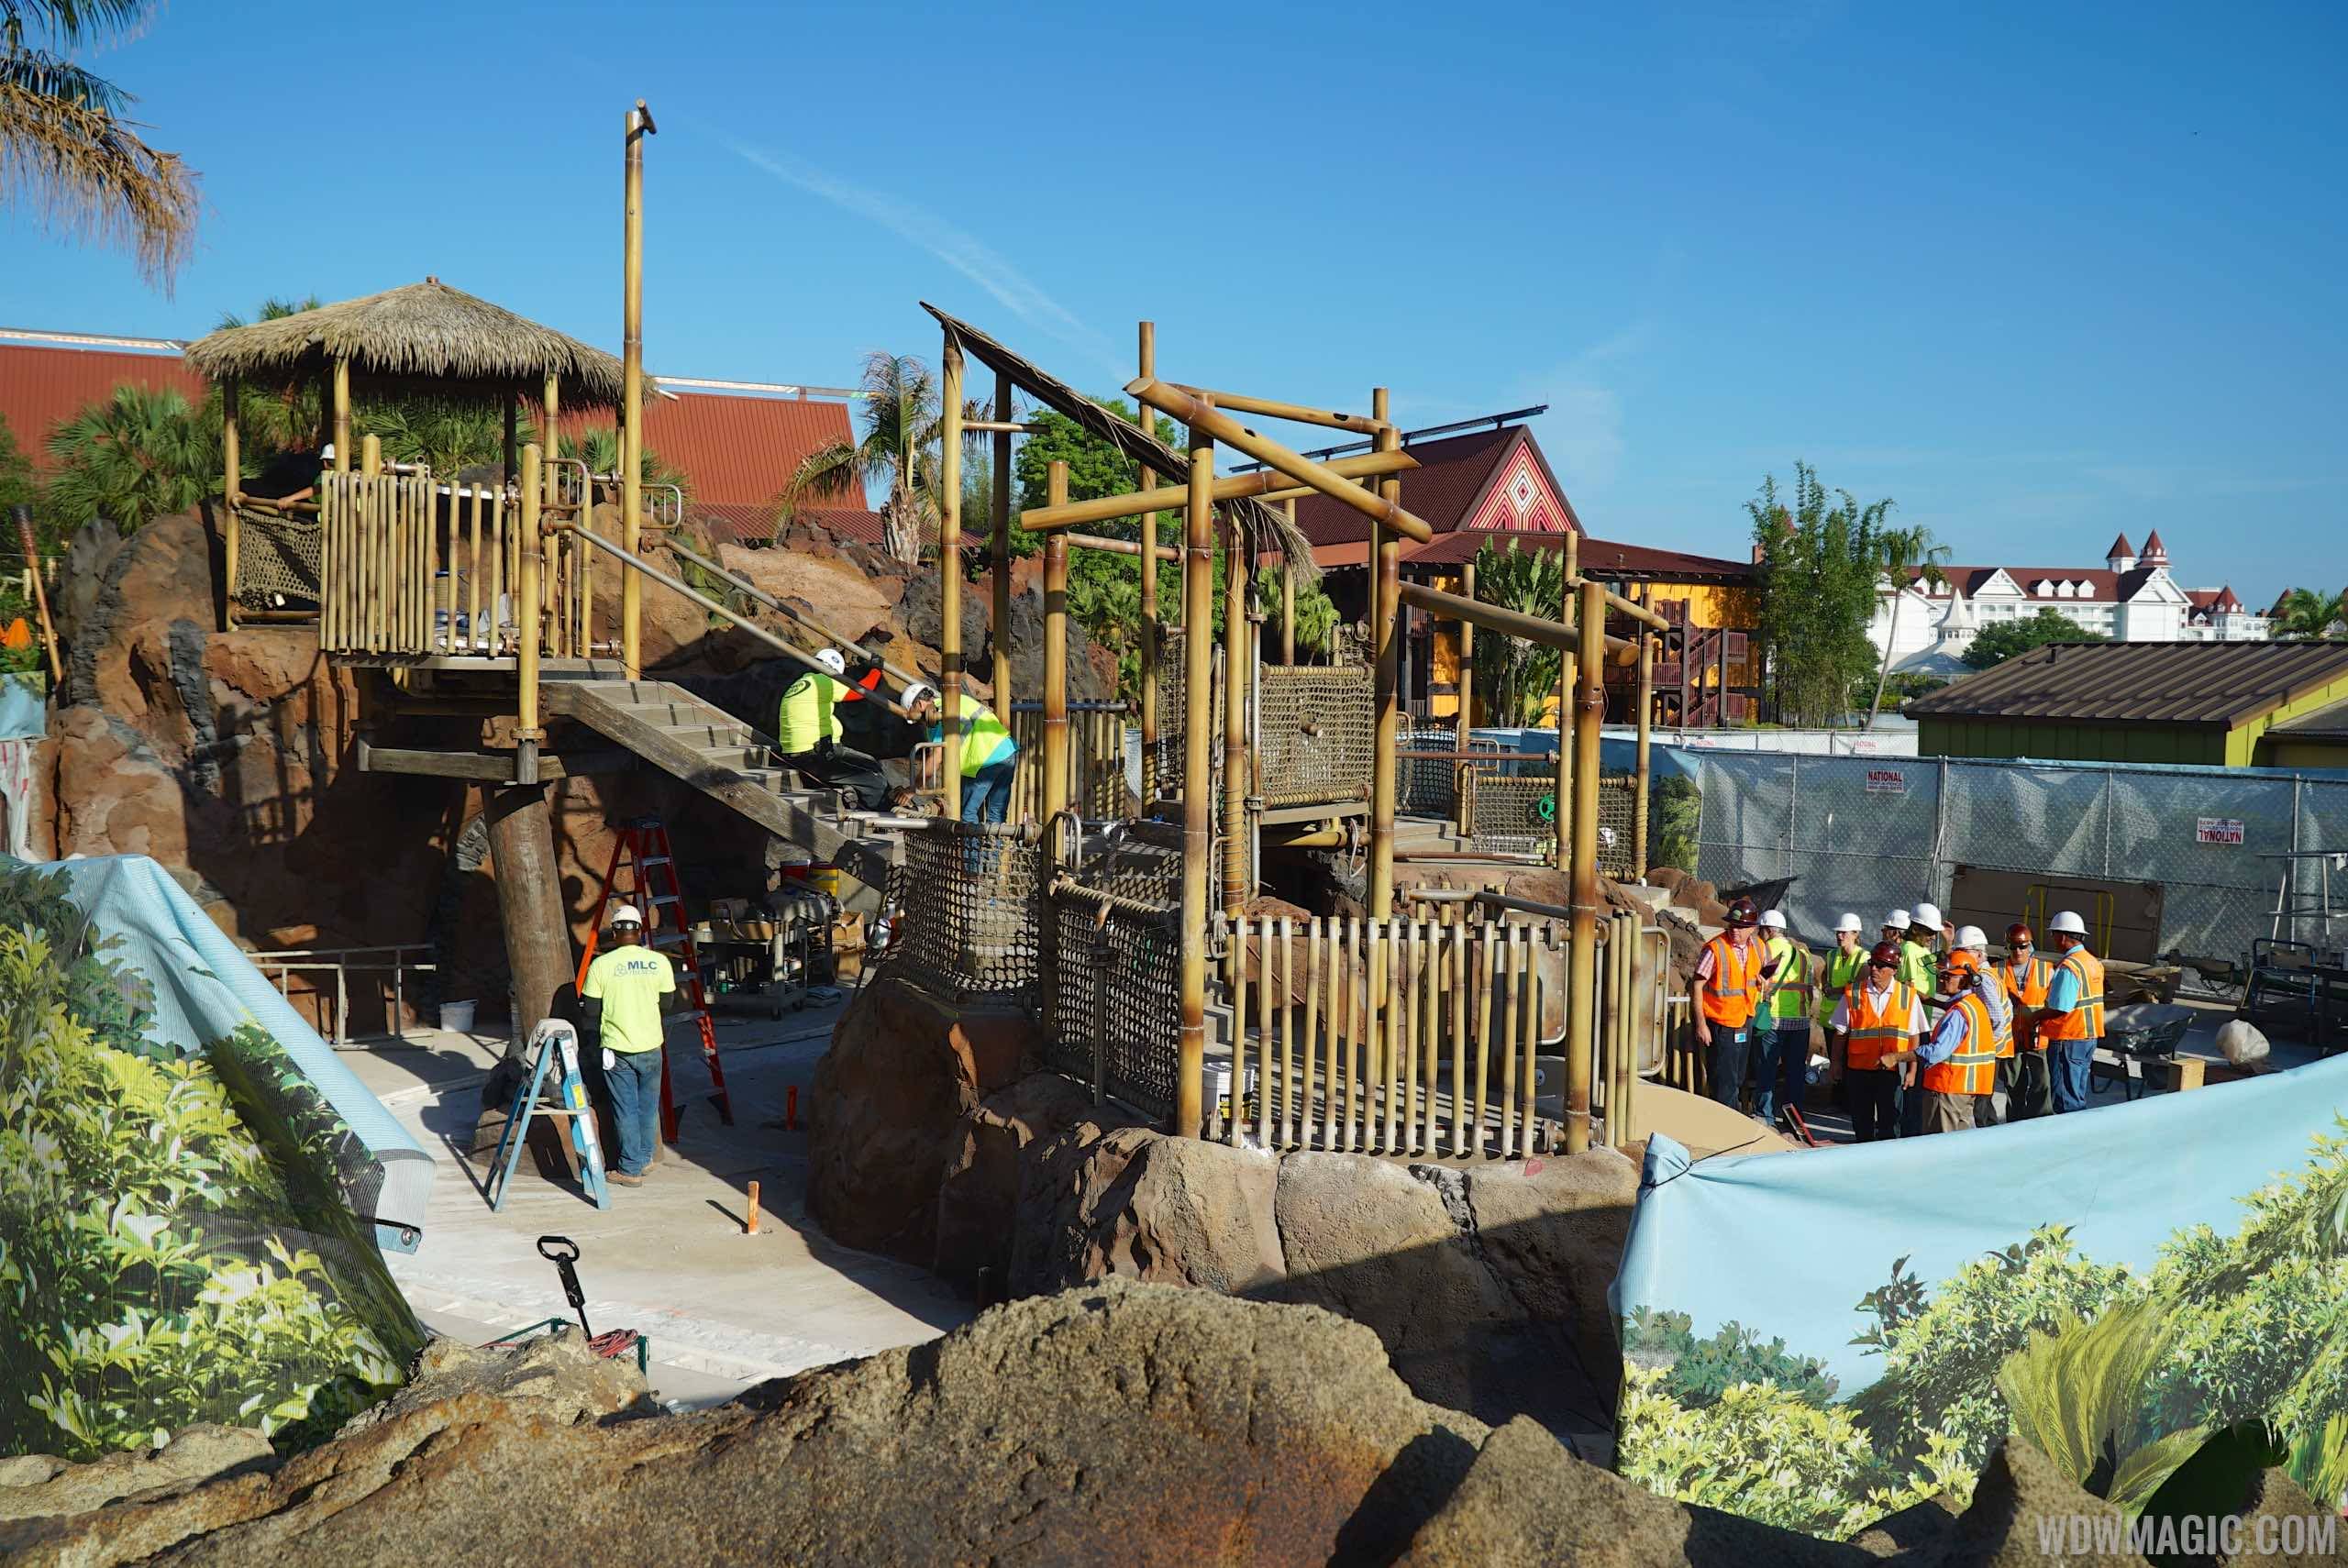 PHOTOS - A look at the new Lava Pool at Disney's Polynesian Village Resort